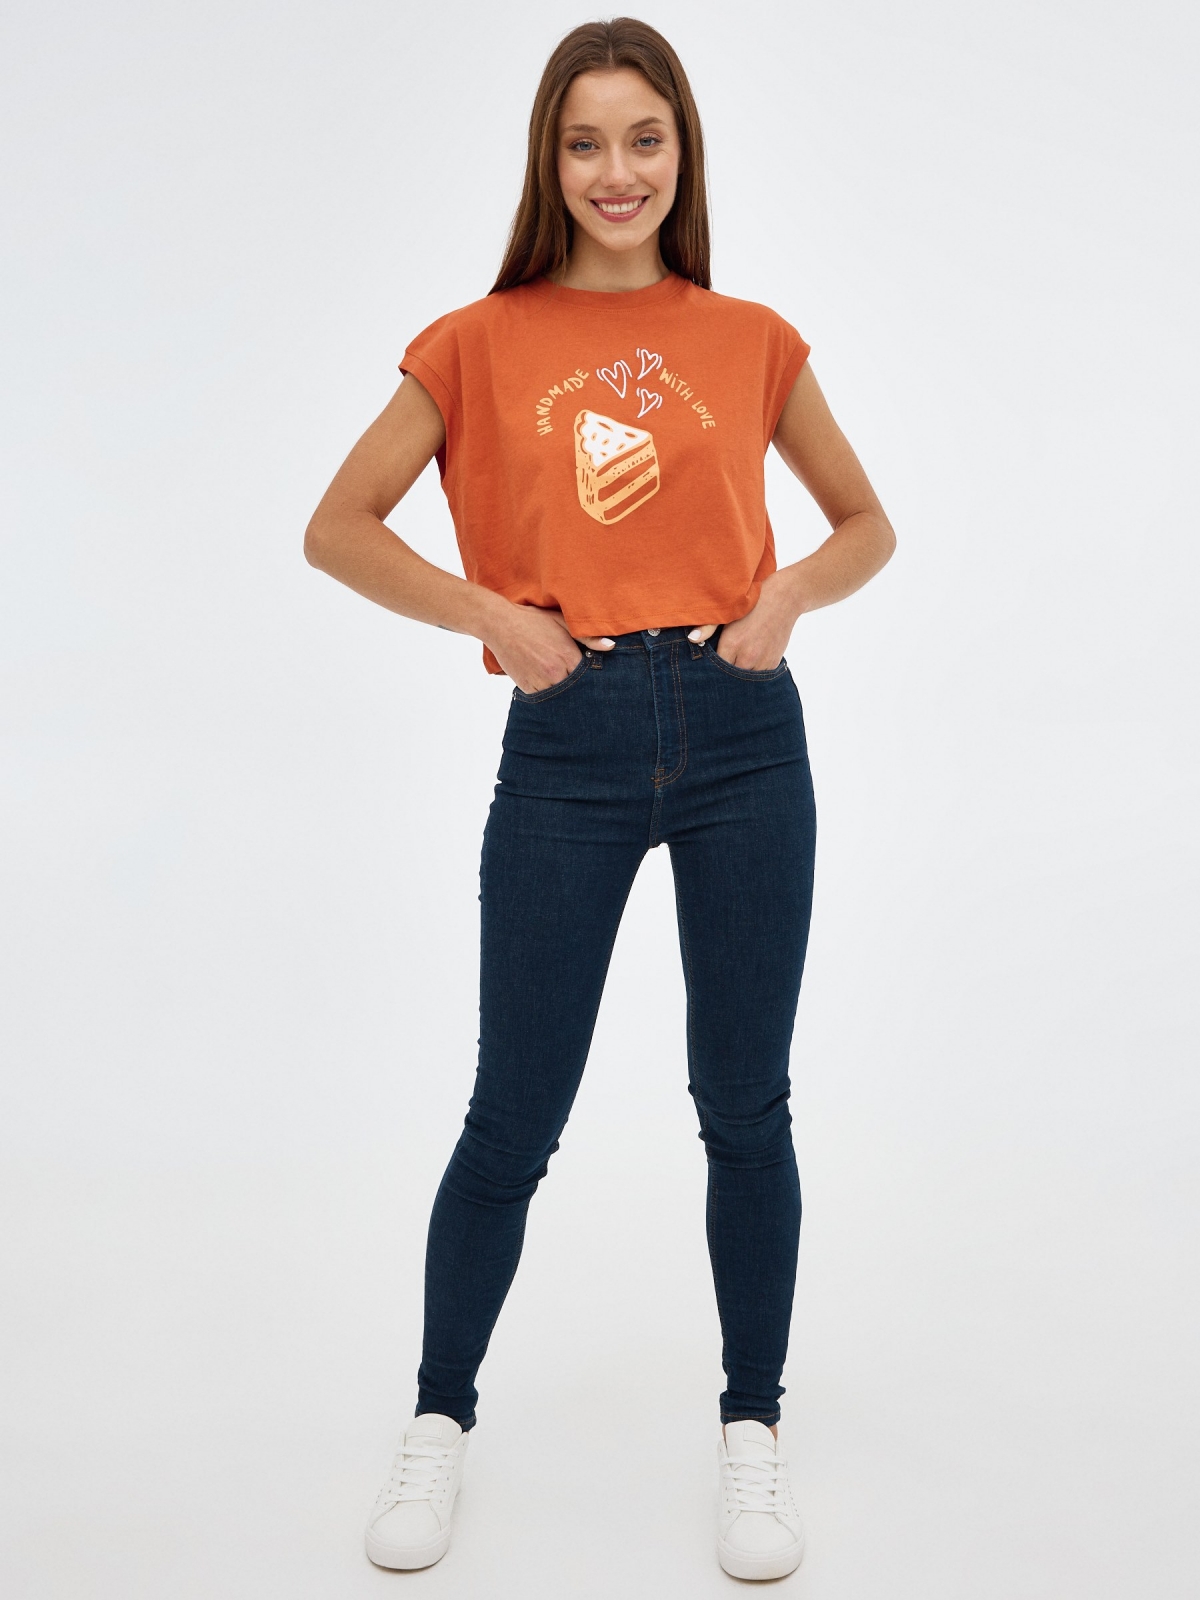 T-shirt gráfica laranja terracota vista geral frontal